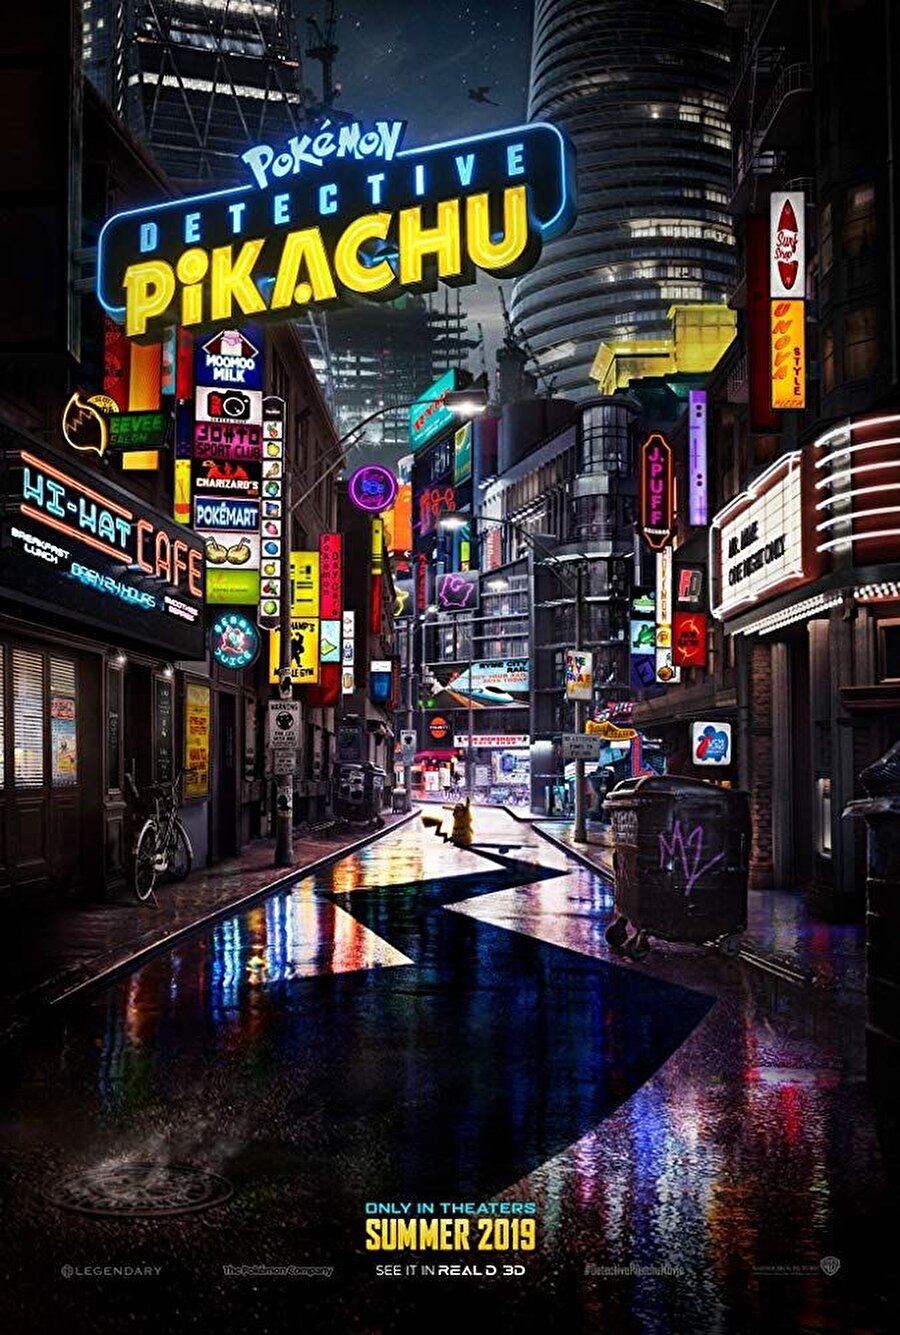 4. Pokemen Dedektif Pikachu (2019)

                                    
                                